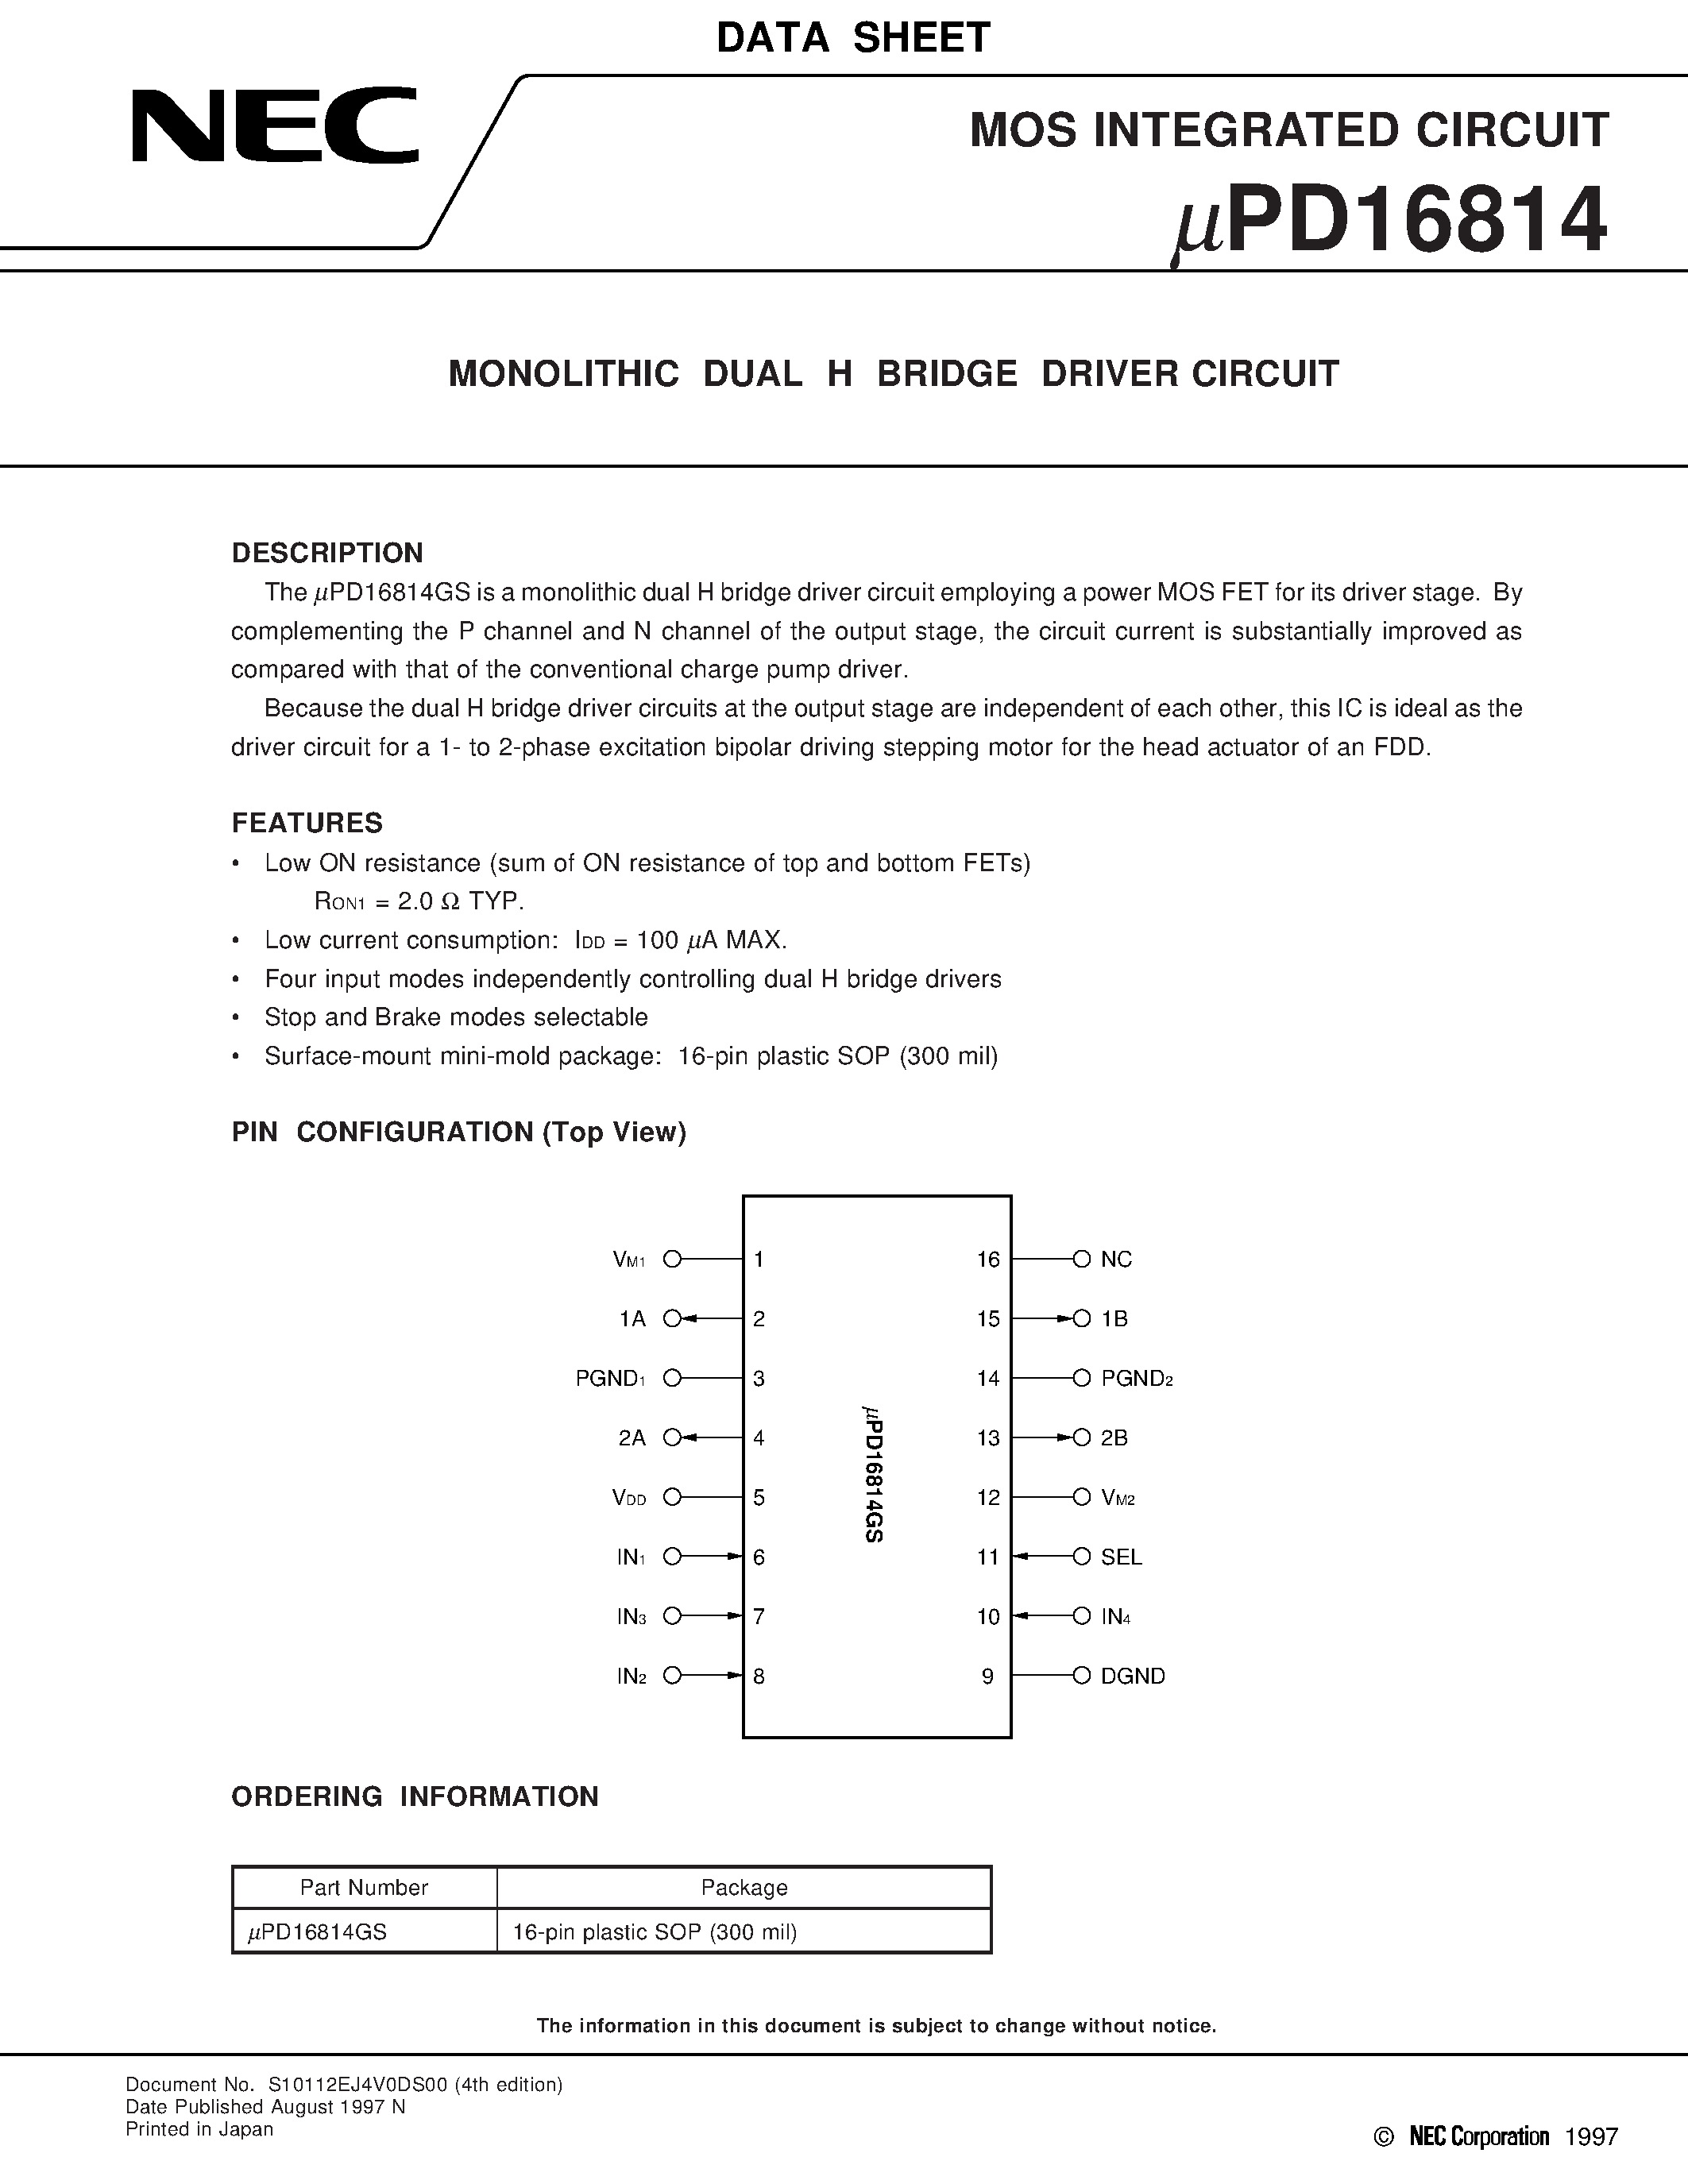 Datasheet UPD16814 - MONOLITHIC DUAL H BRIDGE DRIVER CIRCUIT page 1